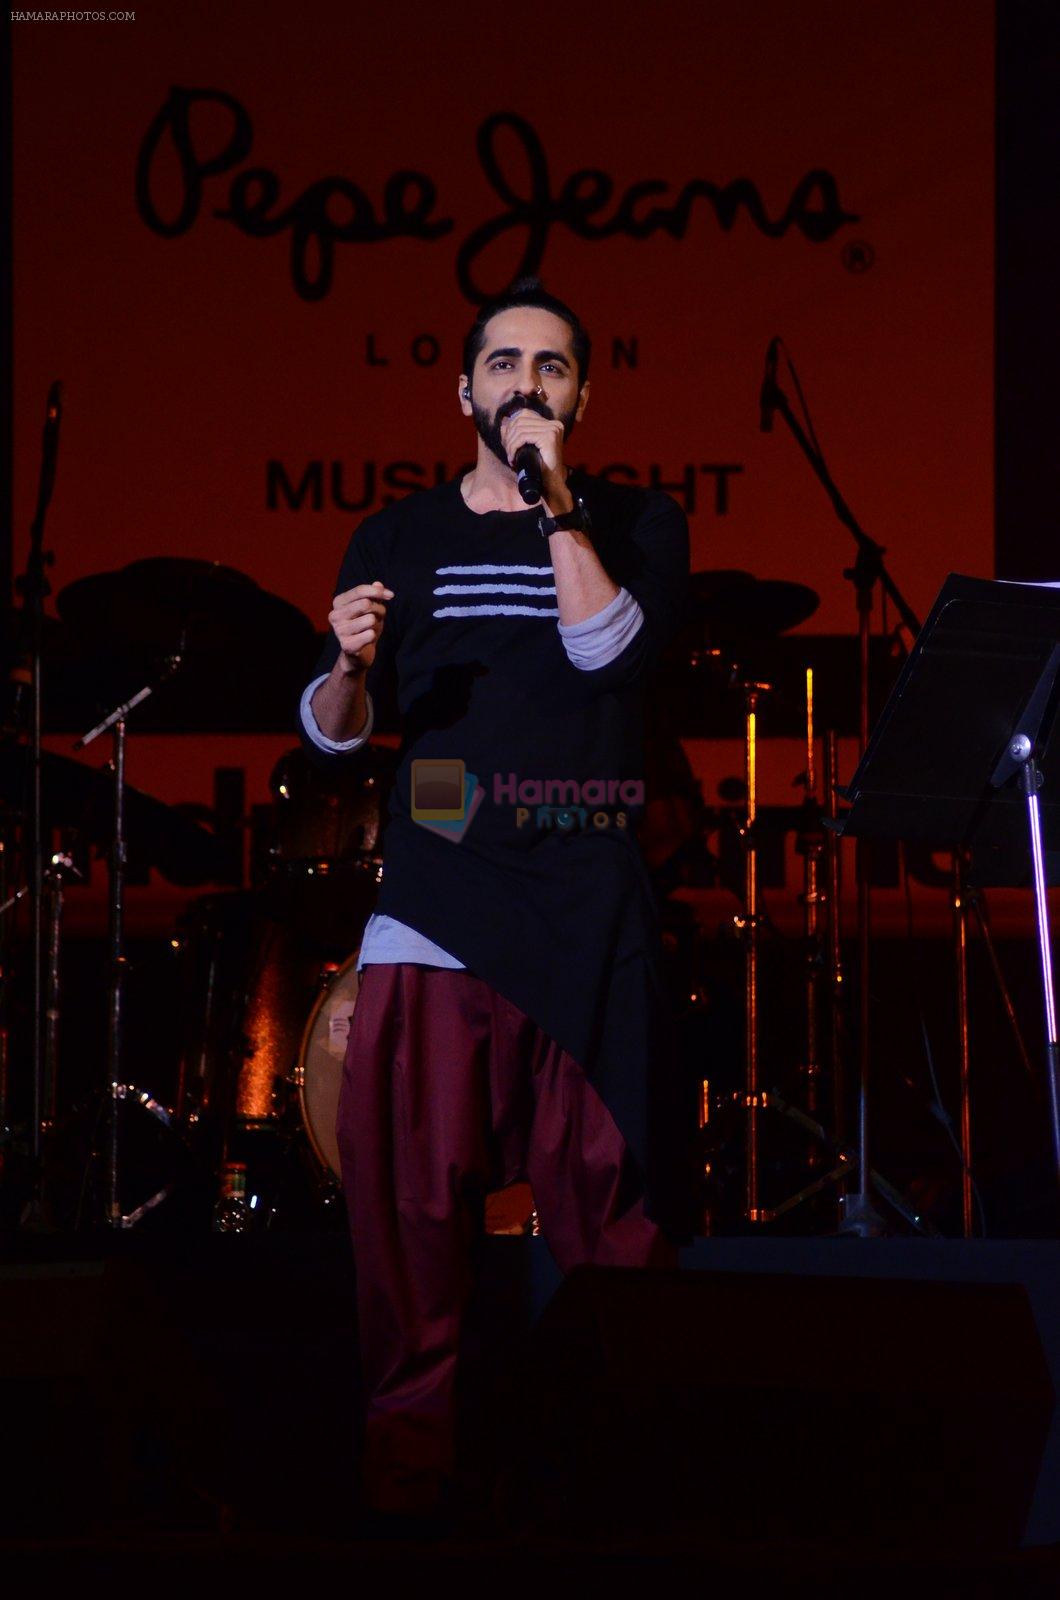 Ayushmann Khurrana at Pepe Jeans music fest in Kalaghoda on 14th Feb 2016